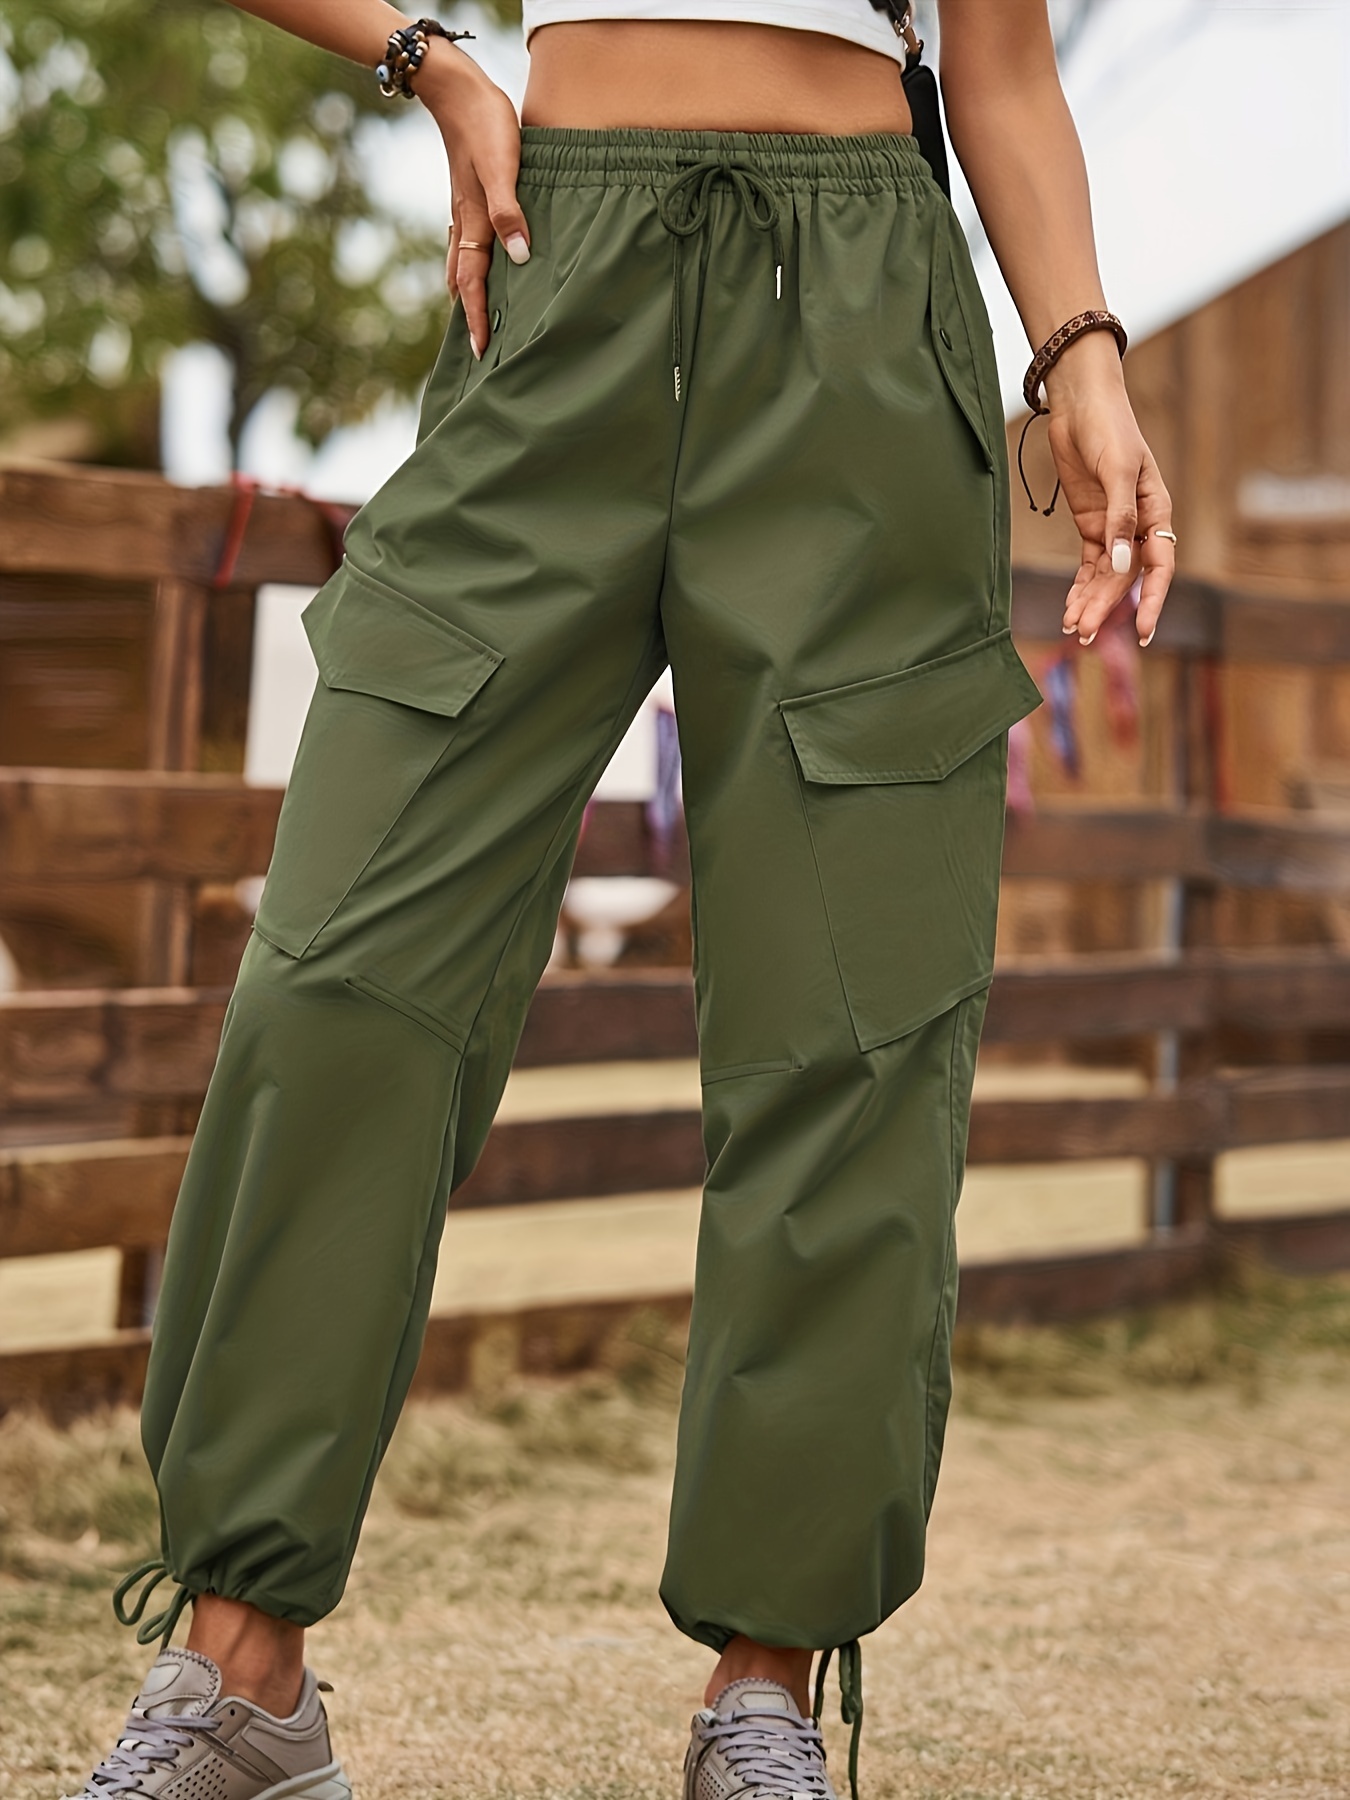 churchf Plain Pocket Sweatpants Side Pockets Drawstring Cargo Pants Women  Stretchy Trendy Casual Trousers